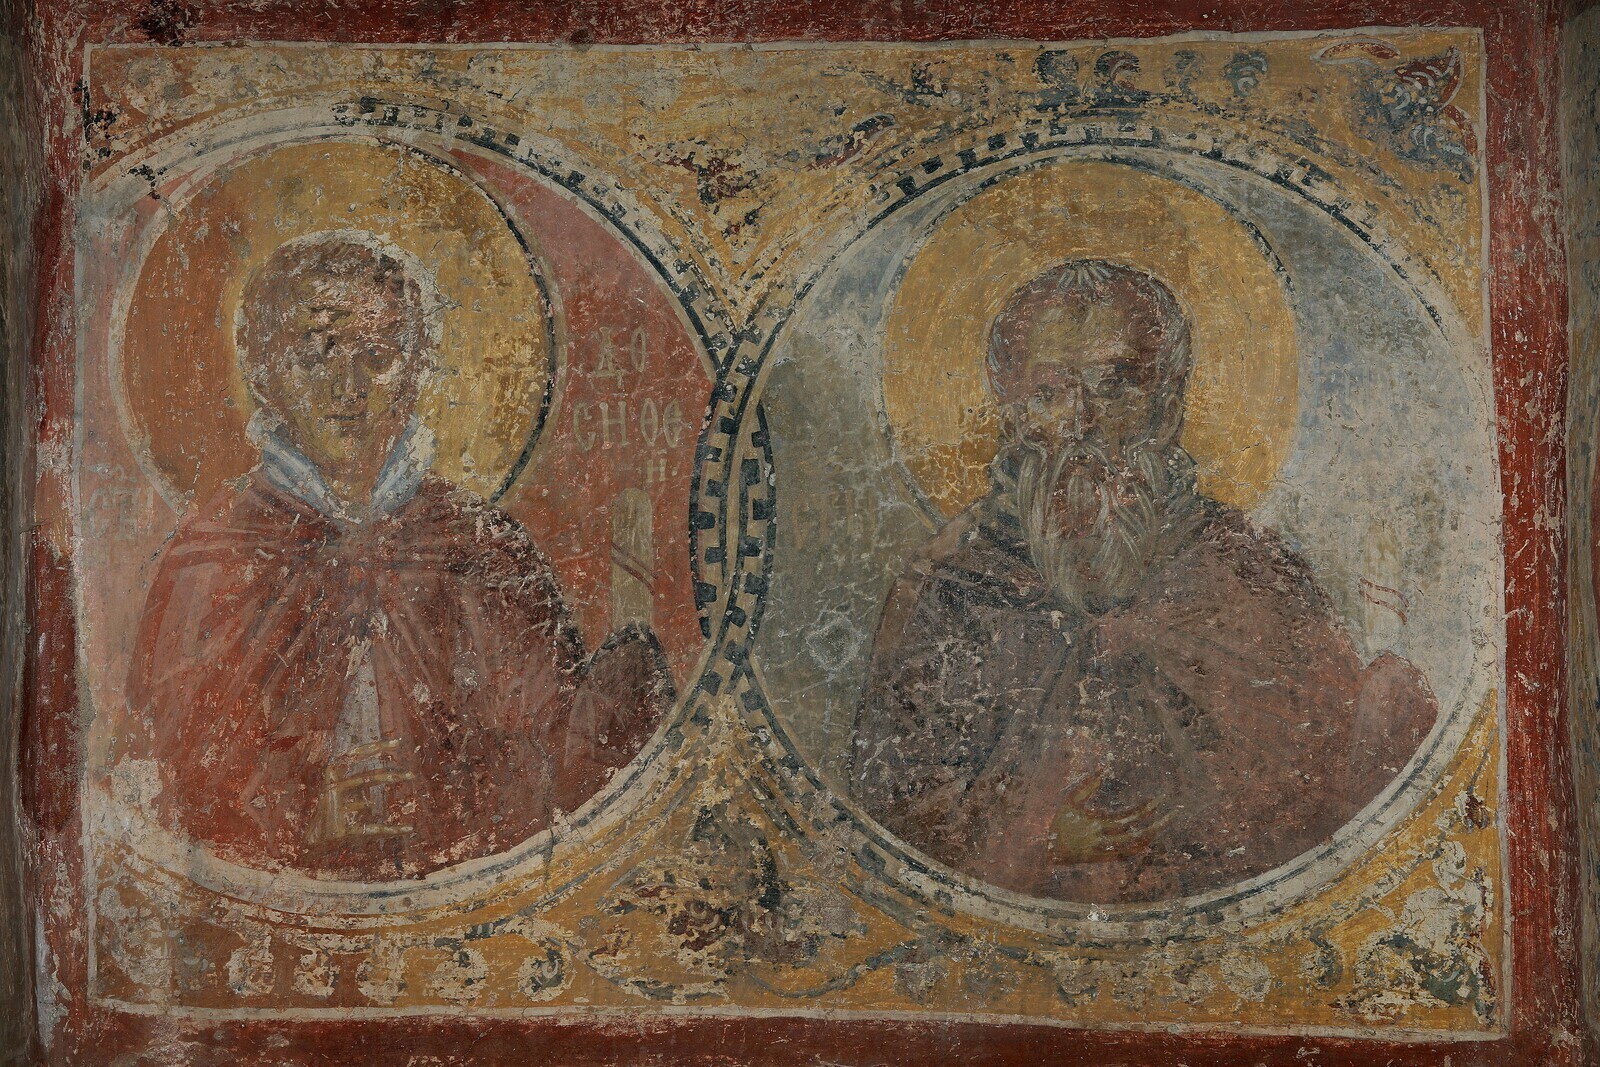 Saints Dositheus and Pachomius